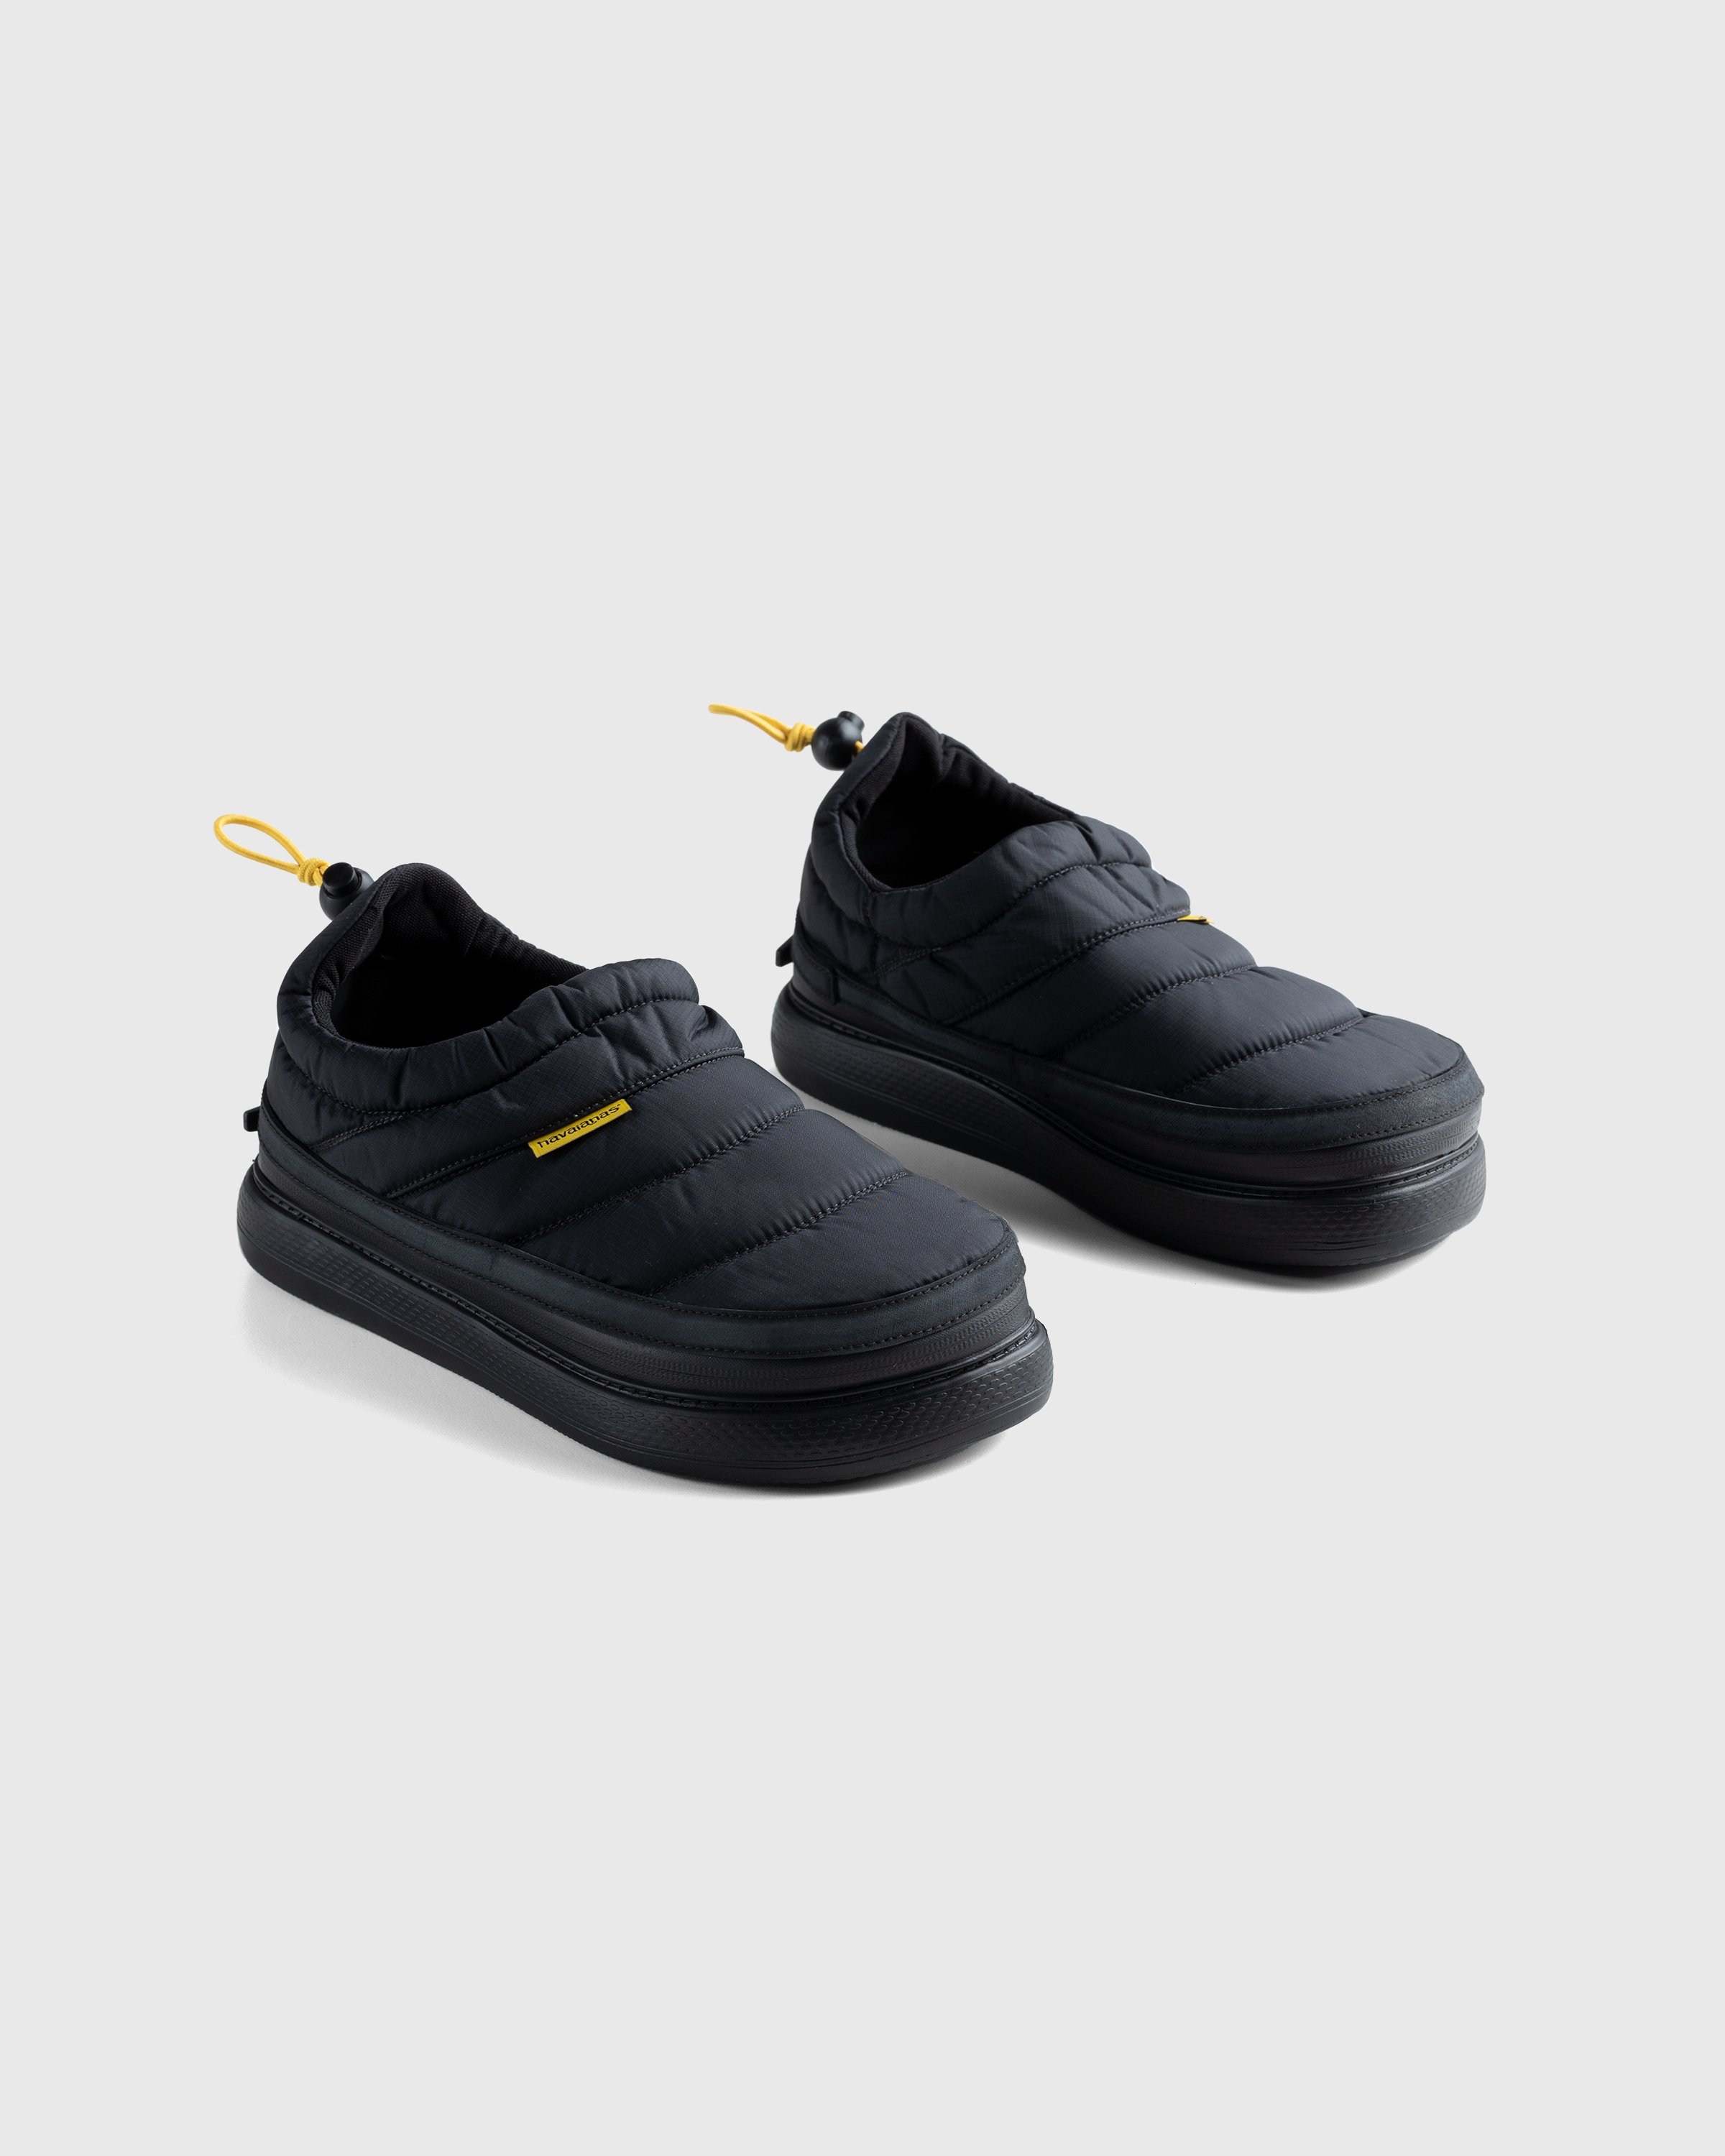 Market - Zip Top Black/Yellow - Footwear - Black - Image 3